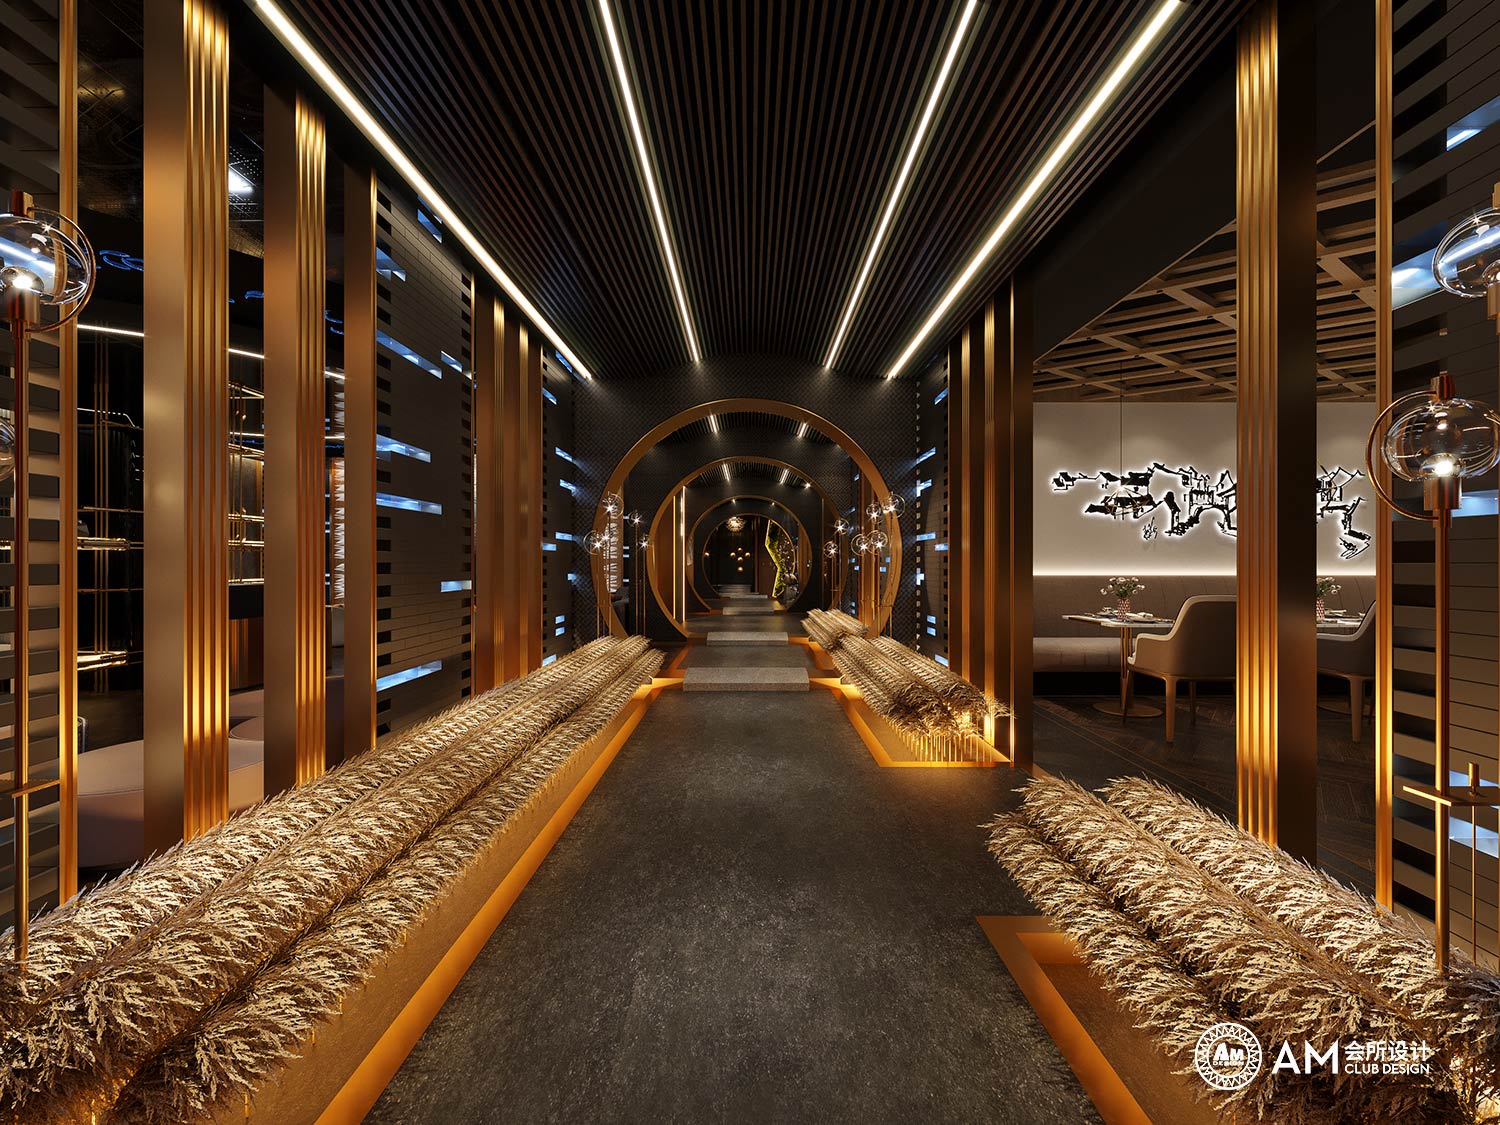 AM DESIGN | Design of lishiyuan Spa Club corrido